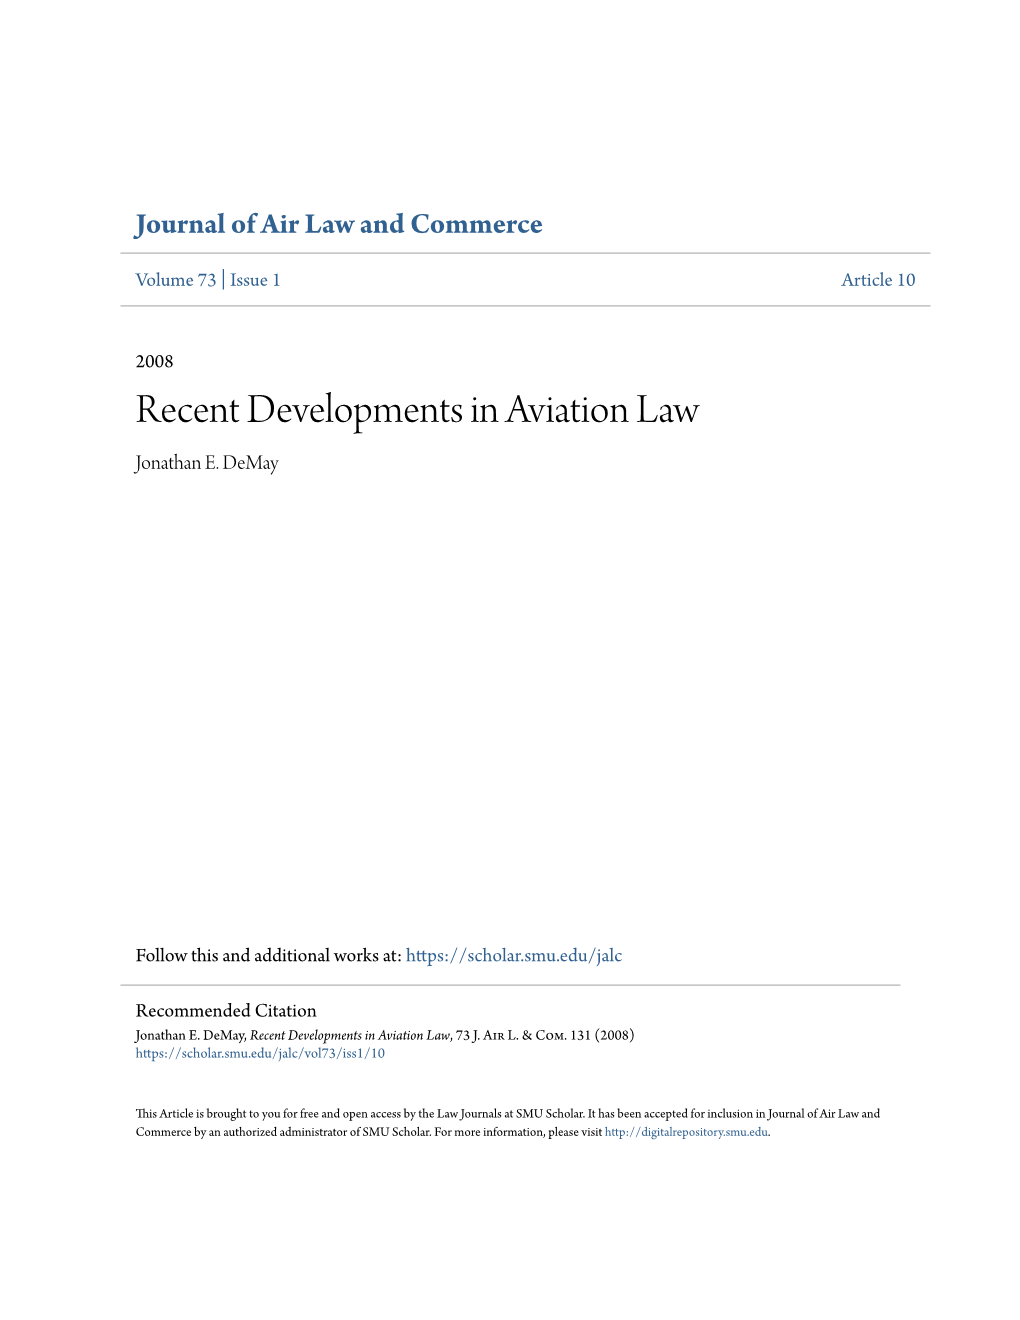 Recent Developments in Aviation Law Jonathan E